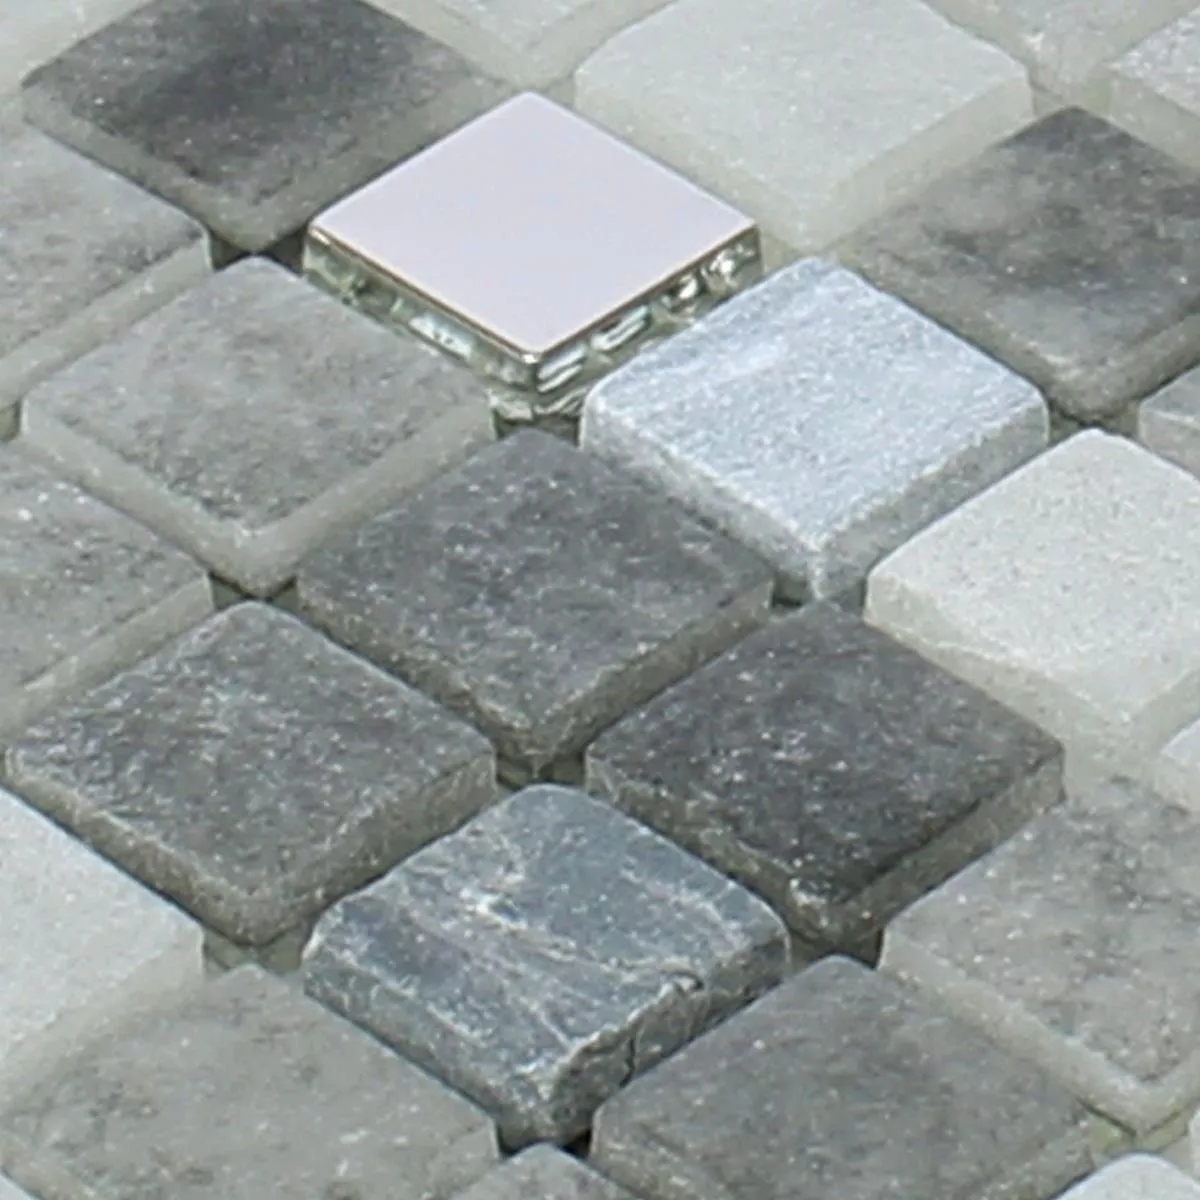 Sample Mosaic Tiles Glass Natural Stone Mix Freyland Black